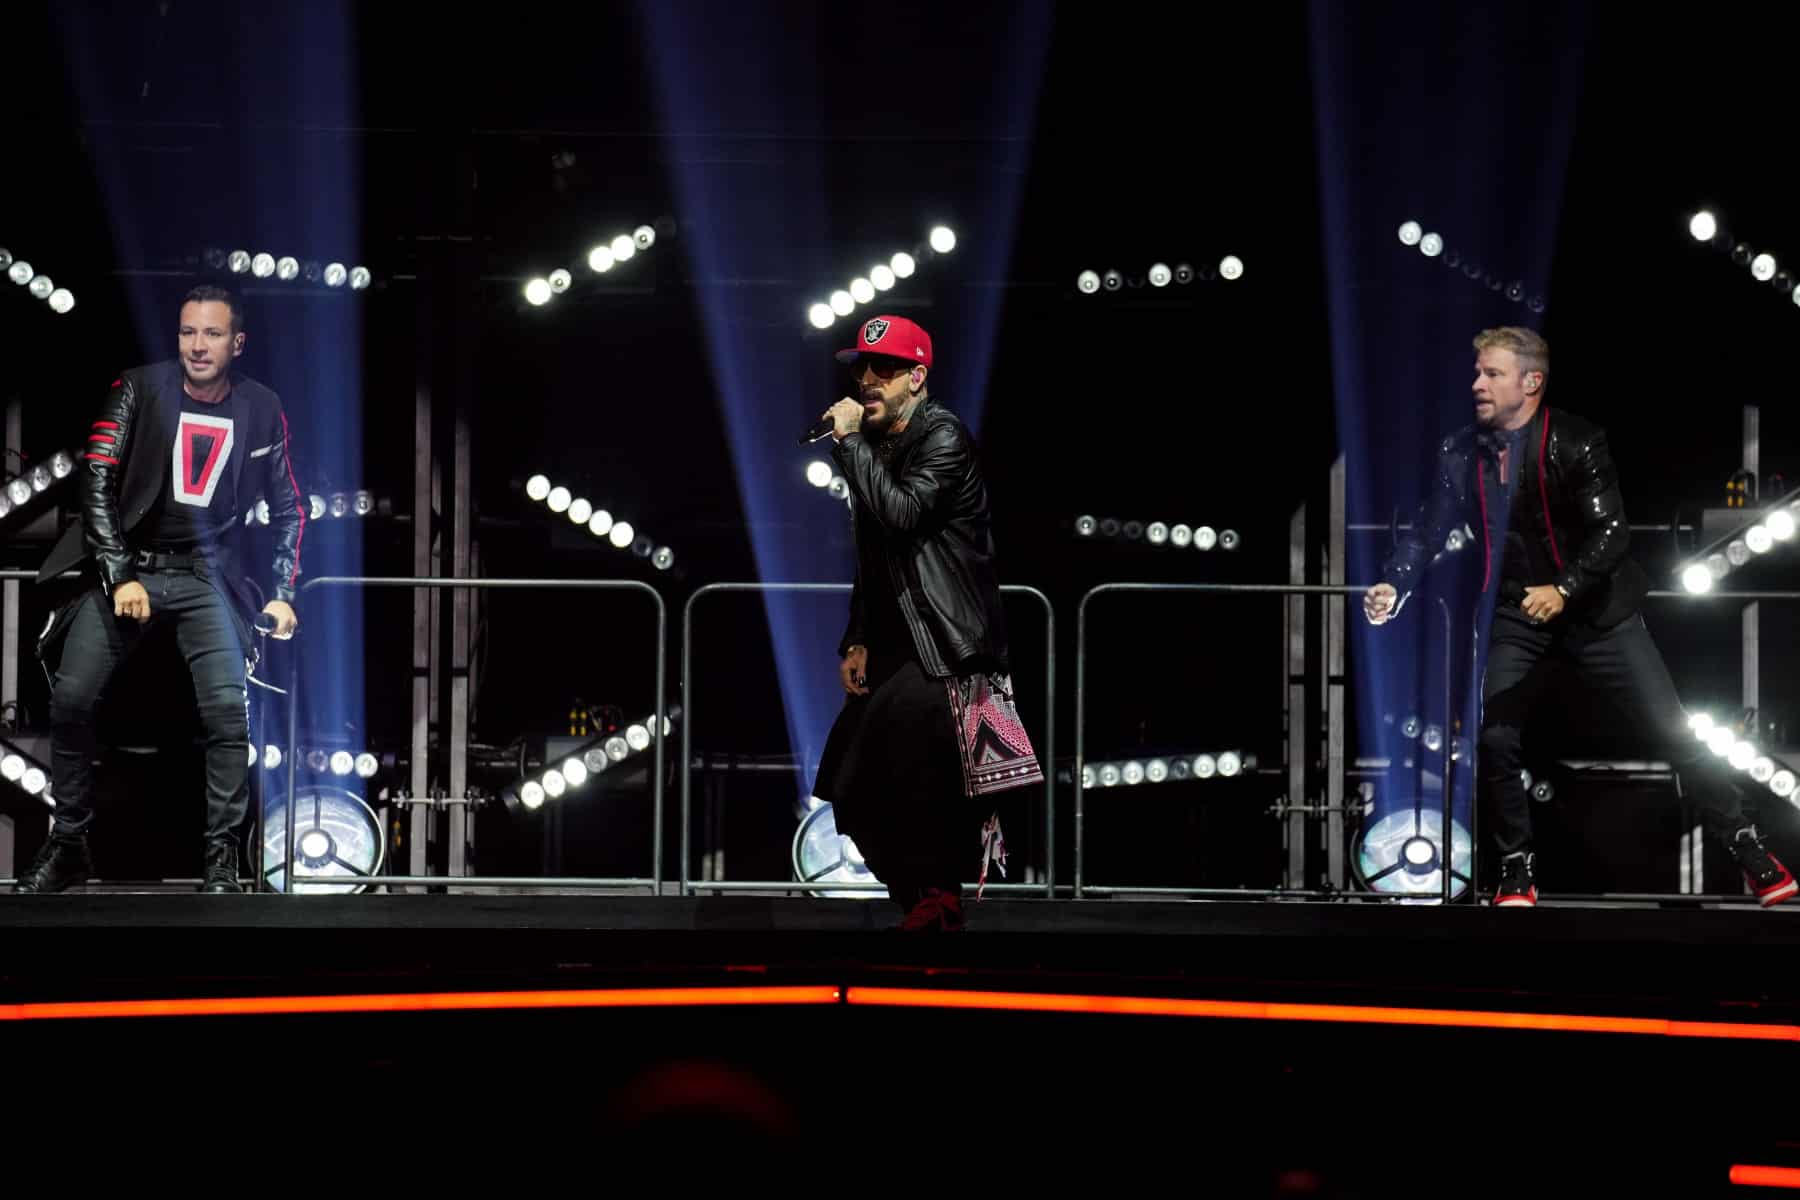 17.10.2022 Backstreet Boys DNA World Tour 2022 live in der Sap Arena Mannheim.
Fotos © by Boris Korpak/ bokopictures